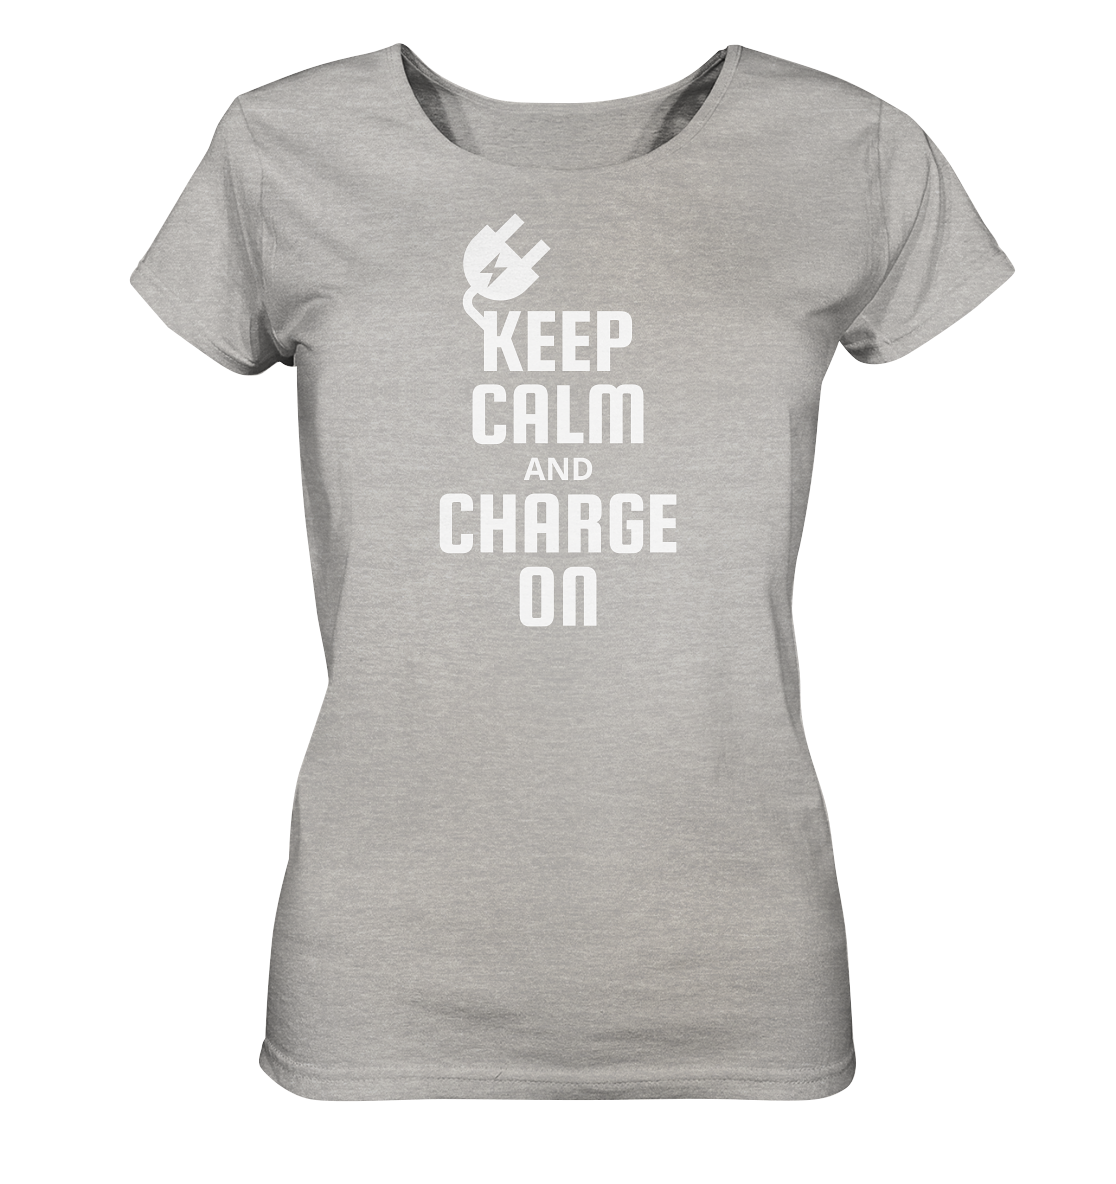 Charge on ORGANIC - Ladies Organic Shirt (meliert)